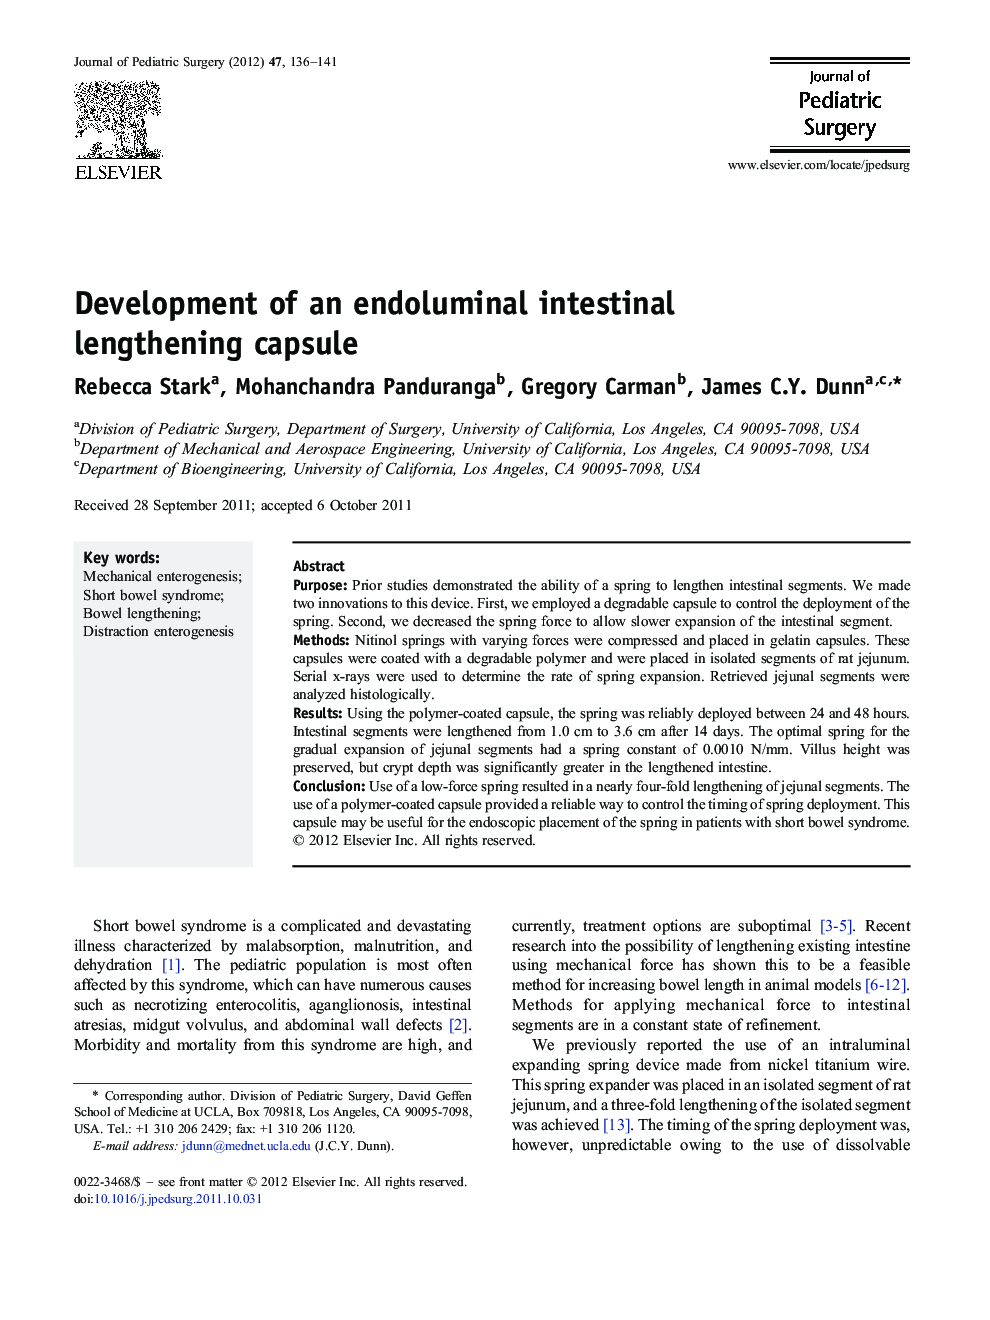 Development of an endoluminal intestinal lengthening capsule